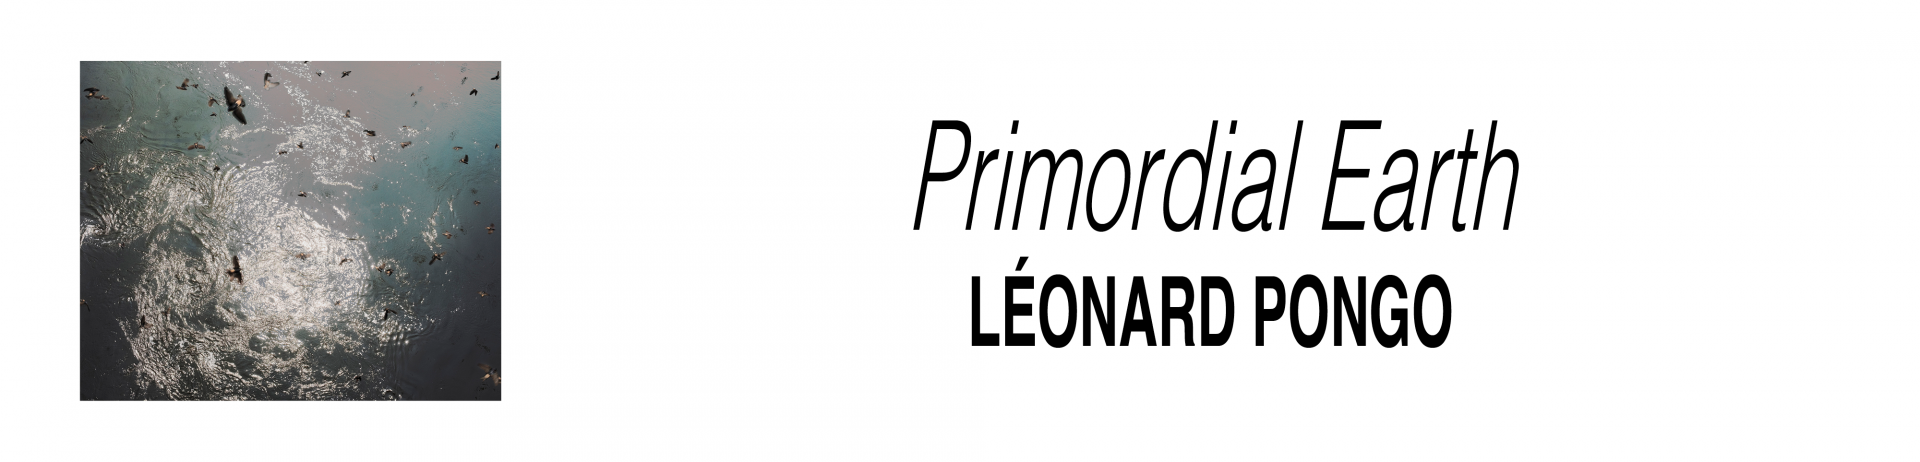 primordial earth leornard pongo